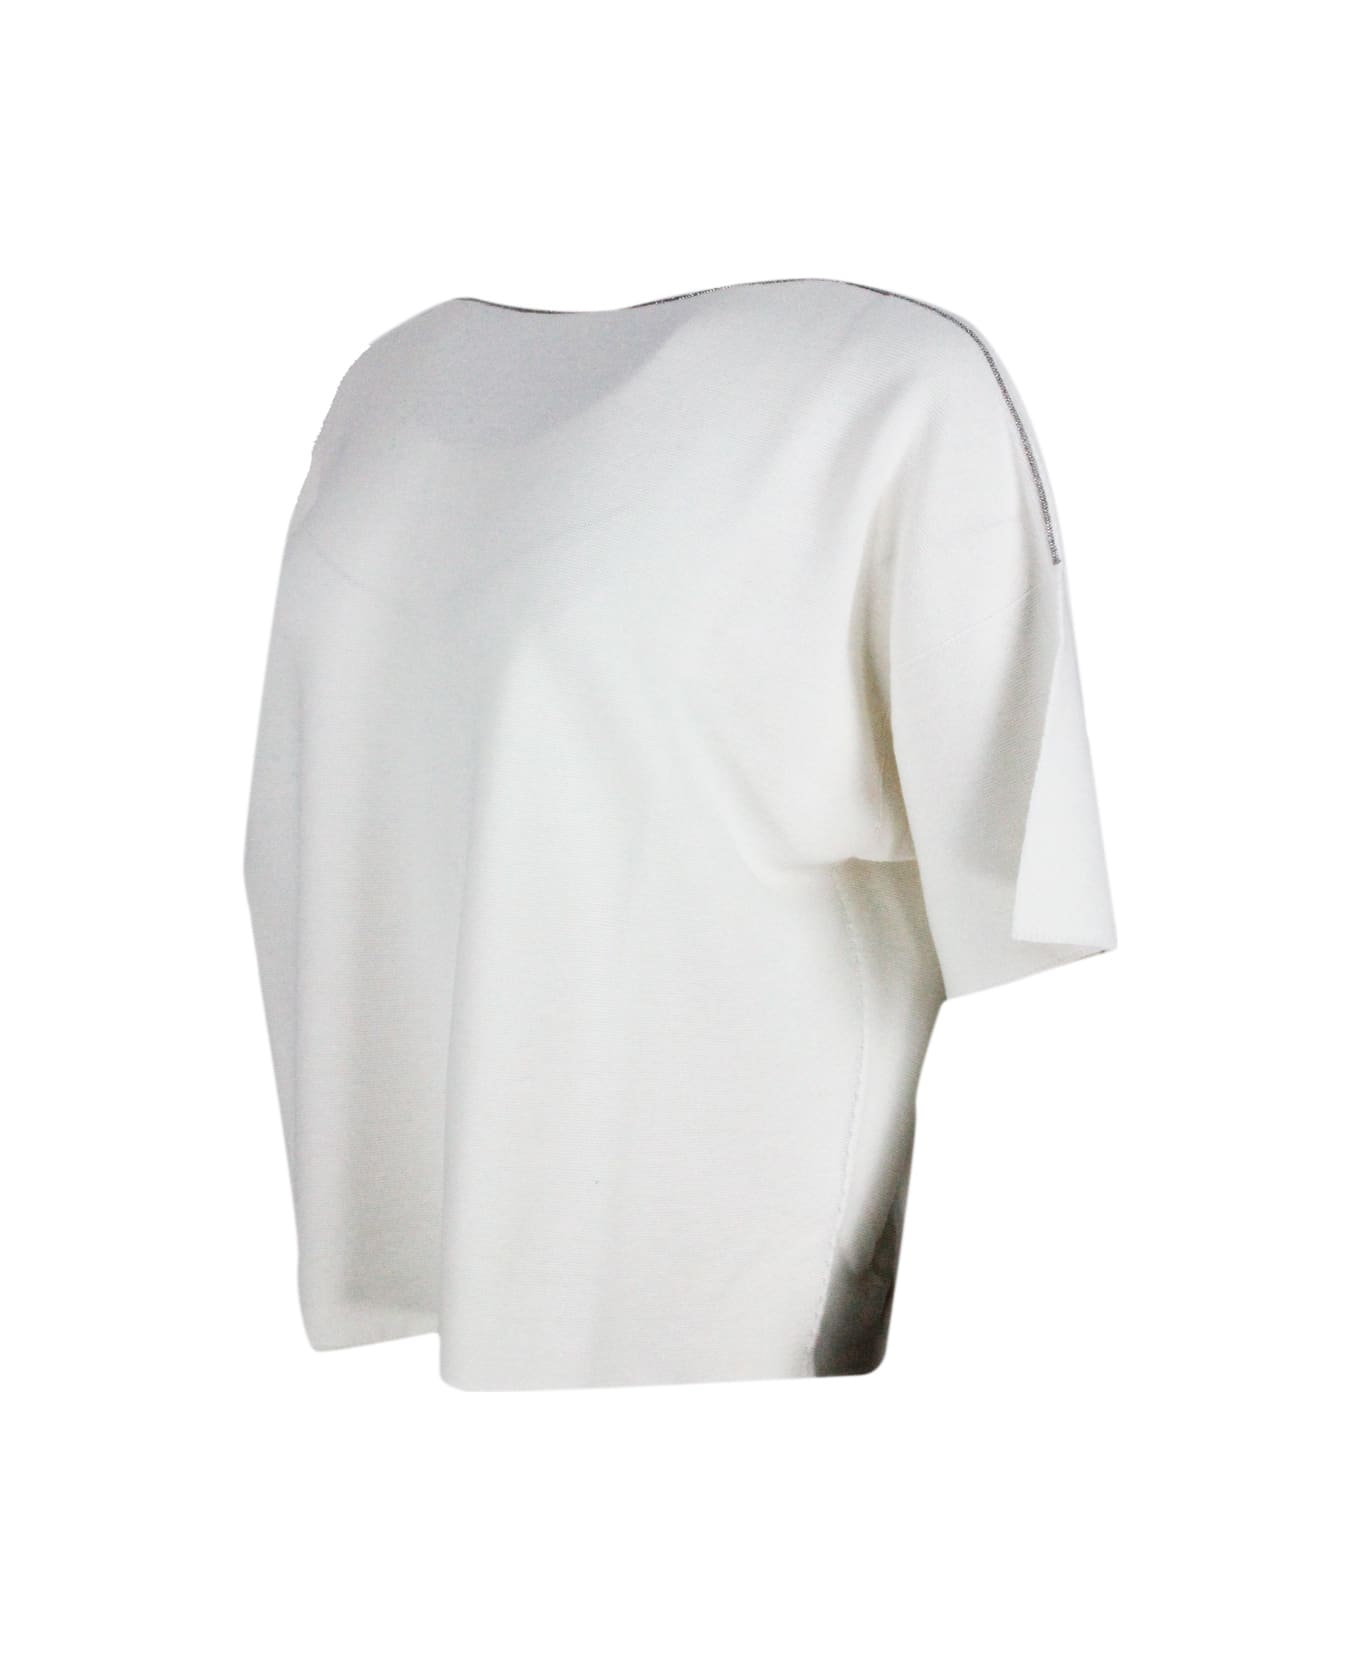 Fabiana Filippi Short-sleeved Cotton Shirt With Horizontal Workmanship With Boat Neckline Embellished With Rows Of Jewels On The Neck - White ニットウェア